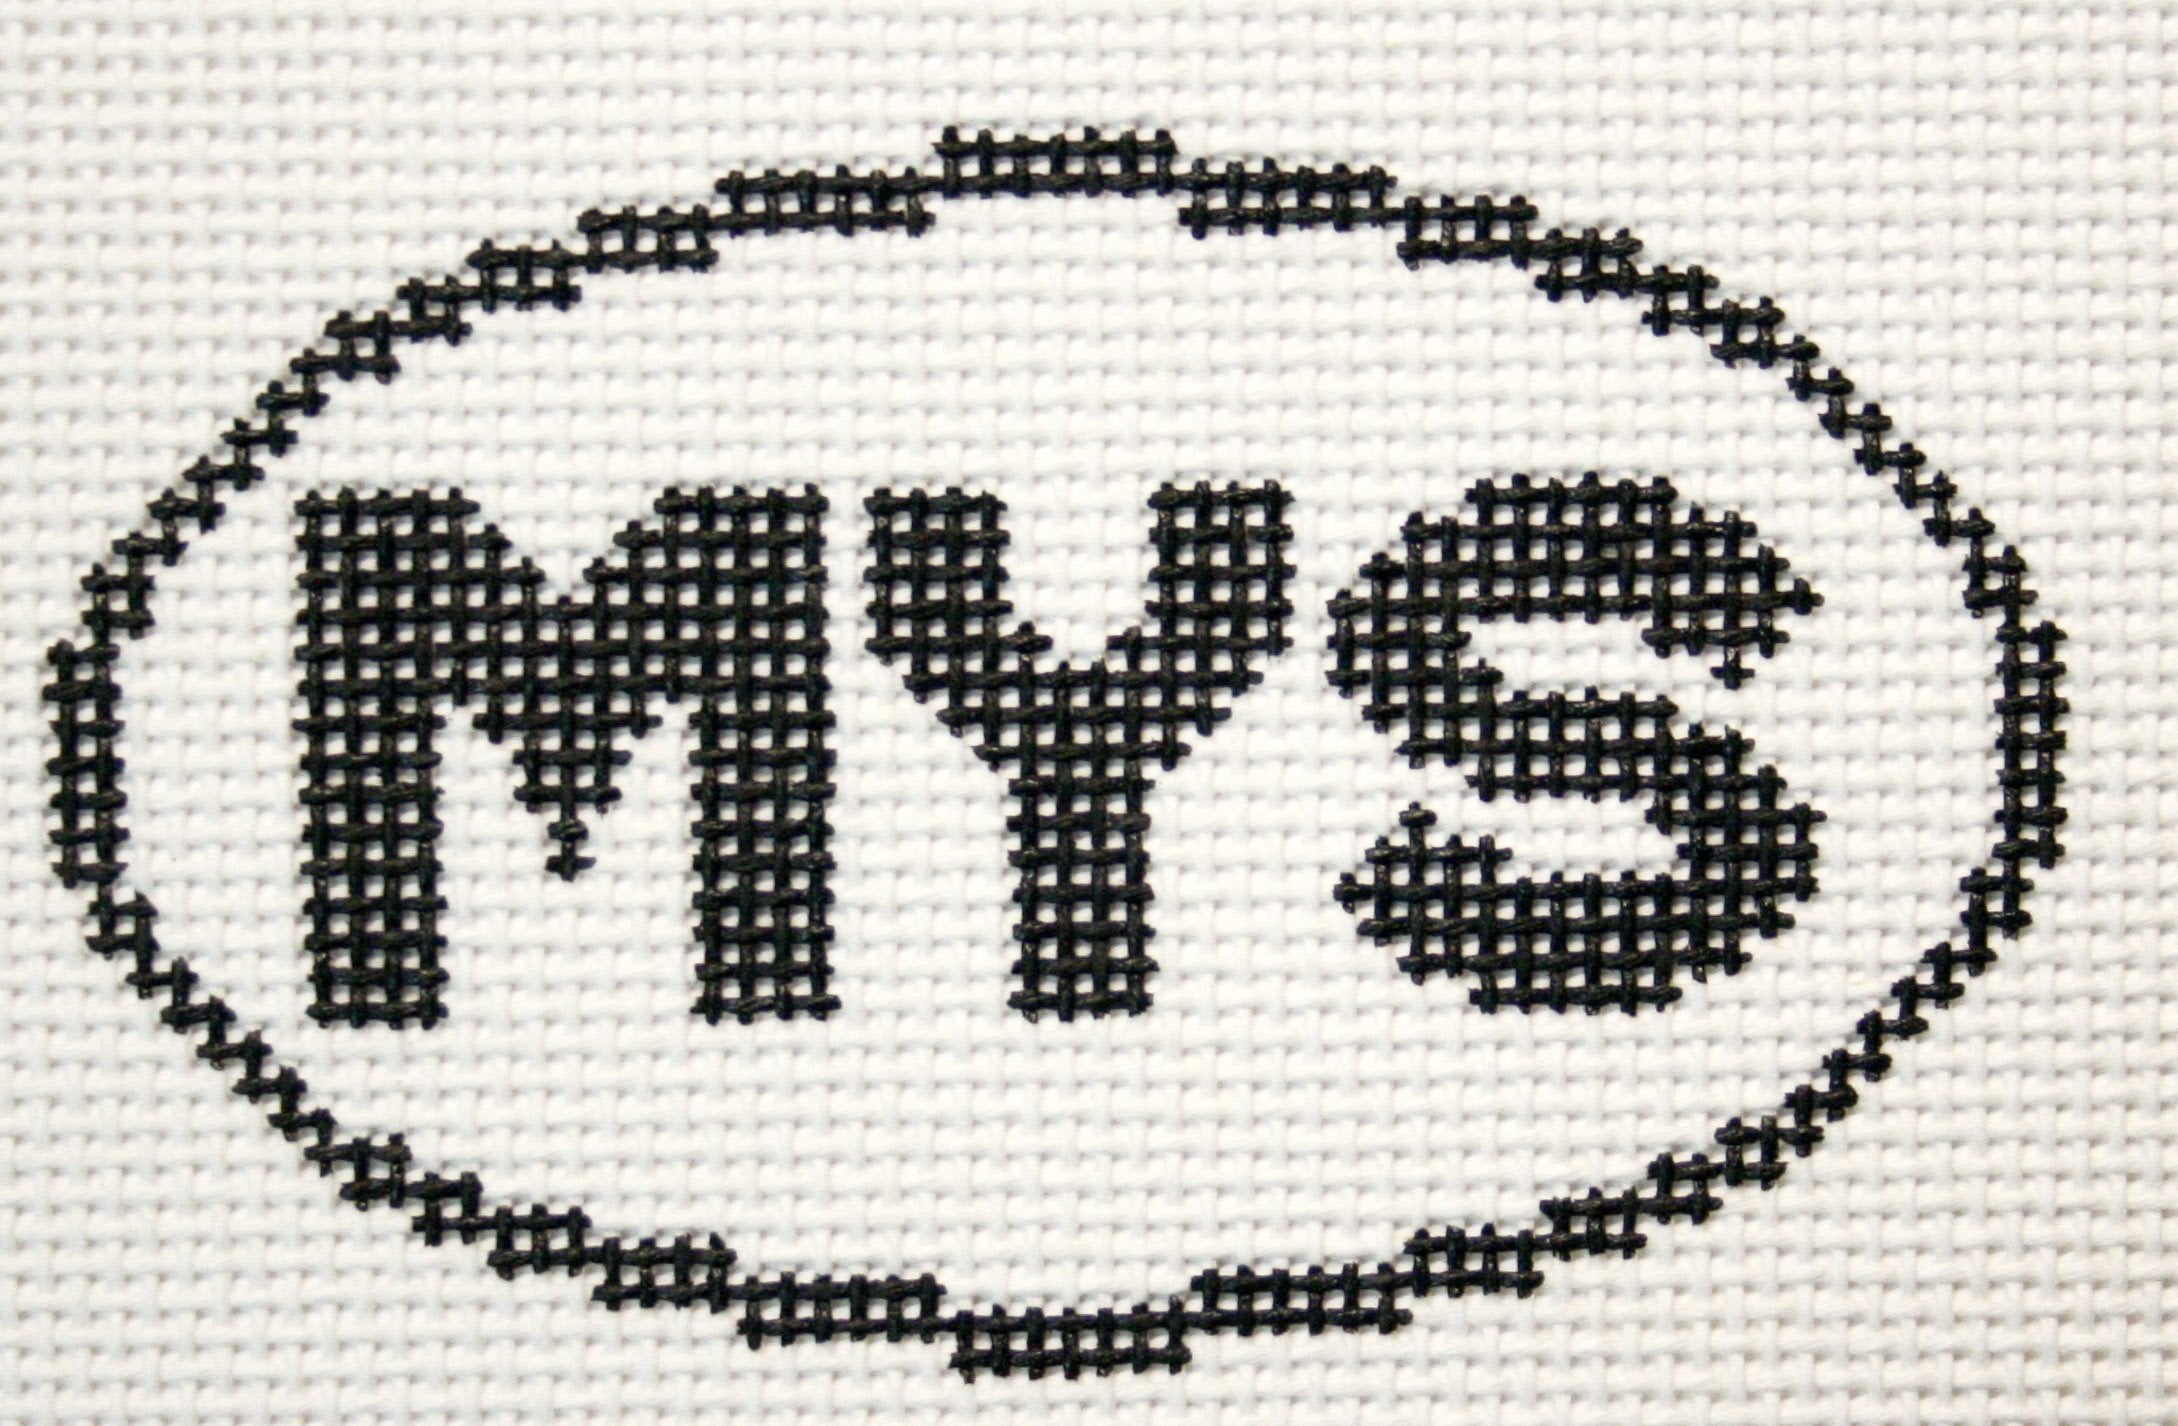 MYS (Mystic, CT) Oval Ornament